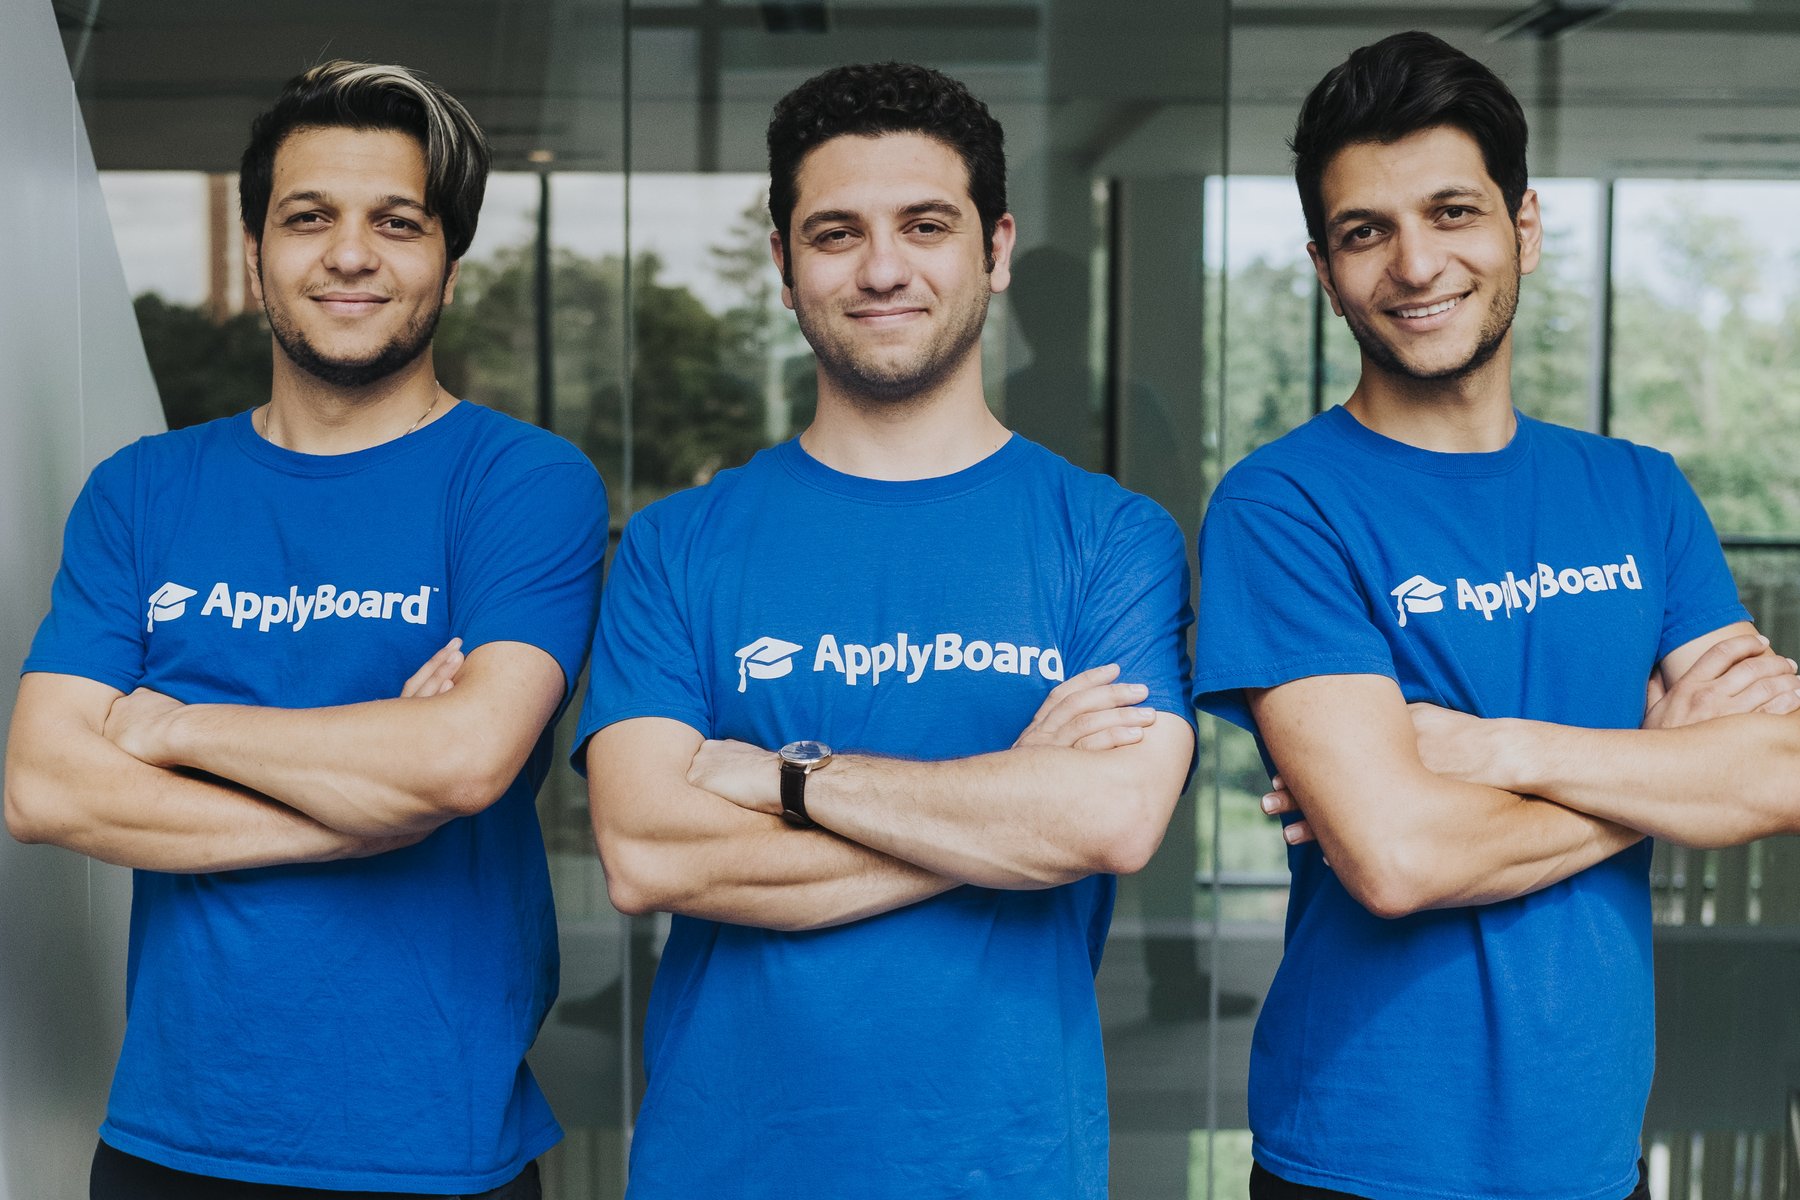 ApplyBoard co-founders Meti, Martin, and Massi Basiri